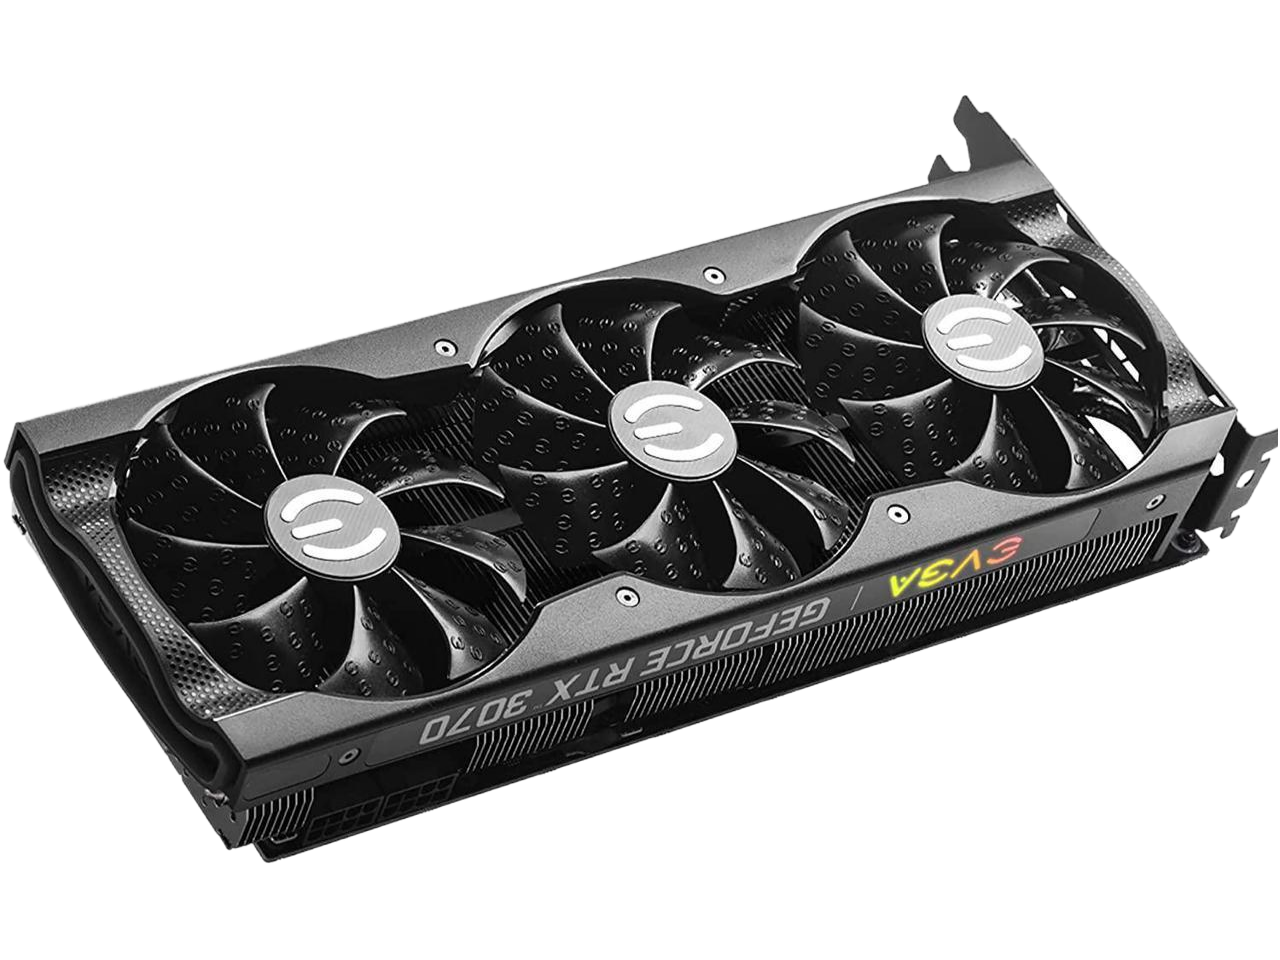 EVGA GeForce RTX 3070 XC3 Black Gaming 8GB GDDR6 iCX3 Cooling ARGB LED LHR Video Card 08G-P5-3751-KL